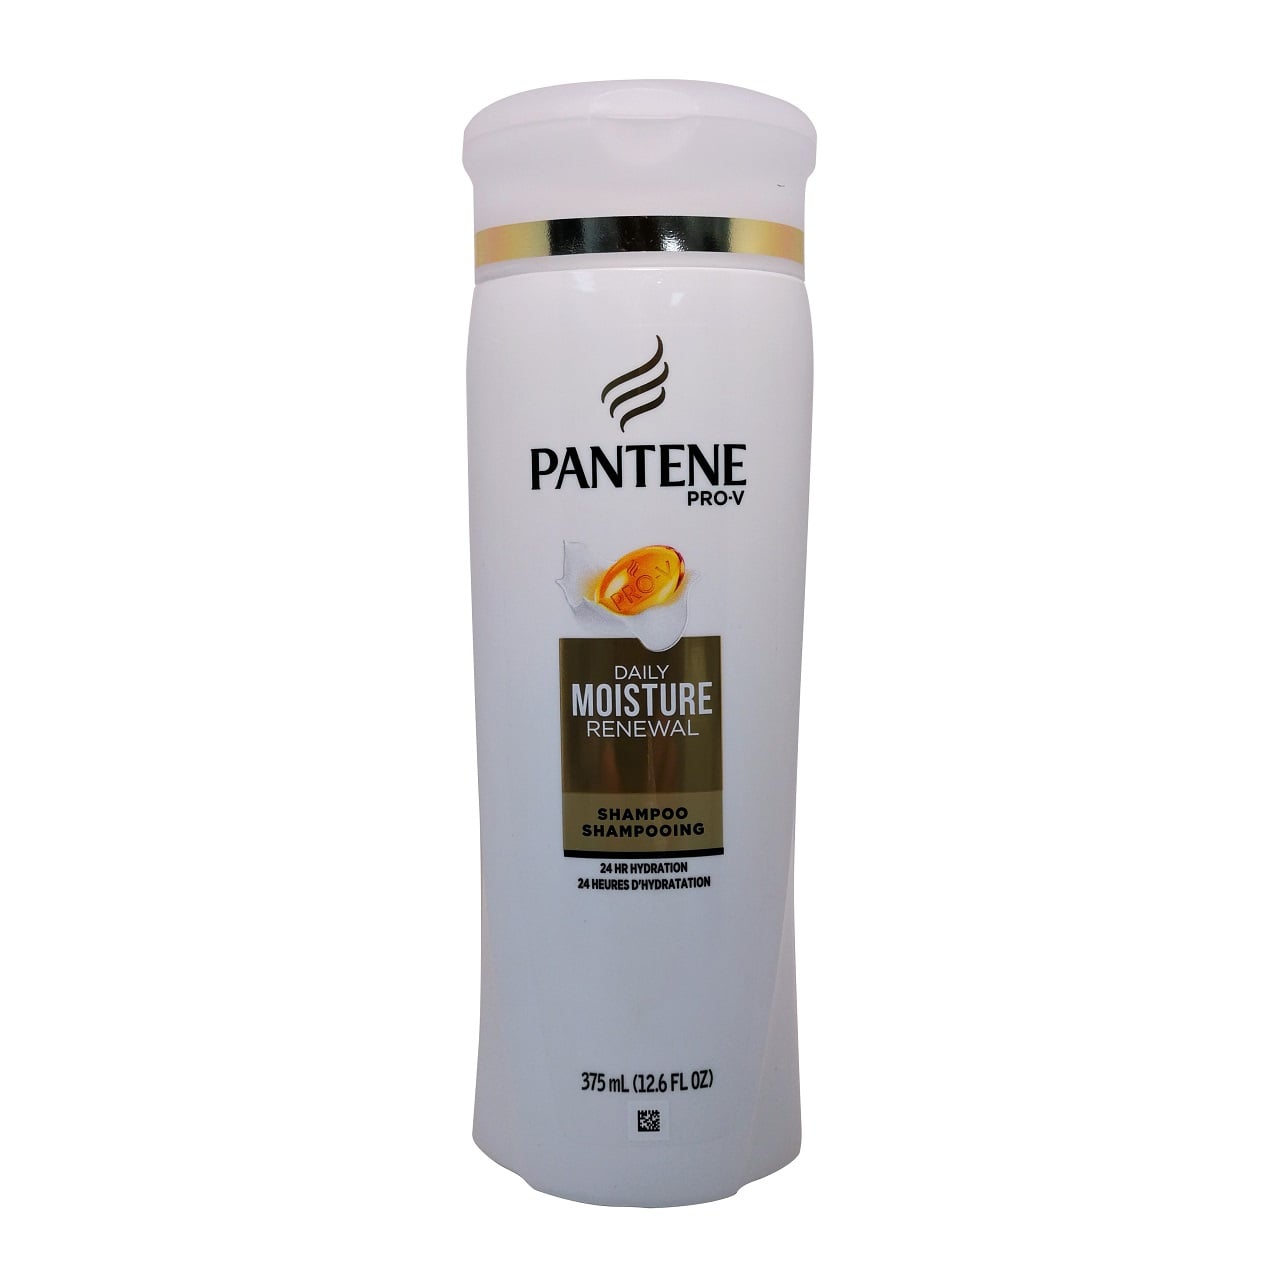 Product label for Pantene Pro-V Daily Moisture Renewal Shampoo (375 mL)